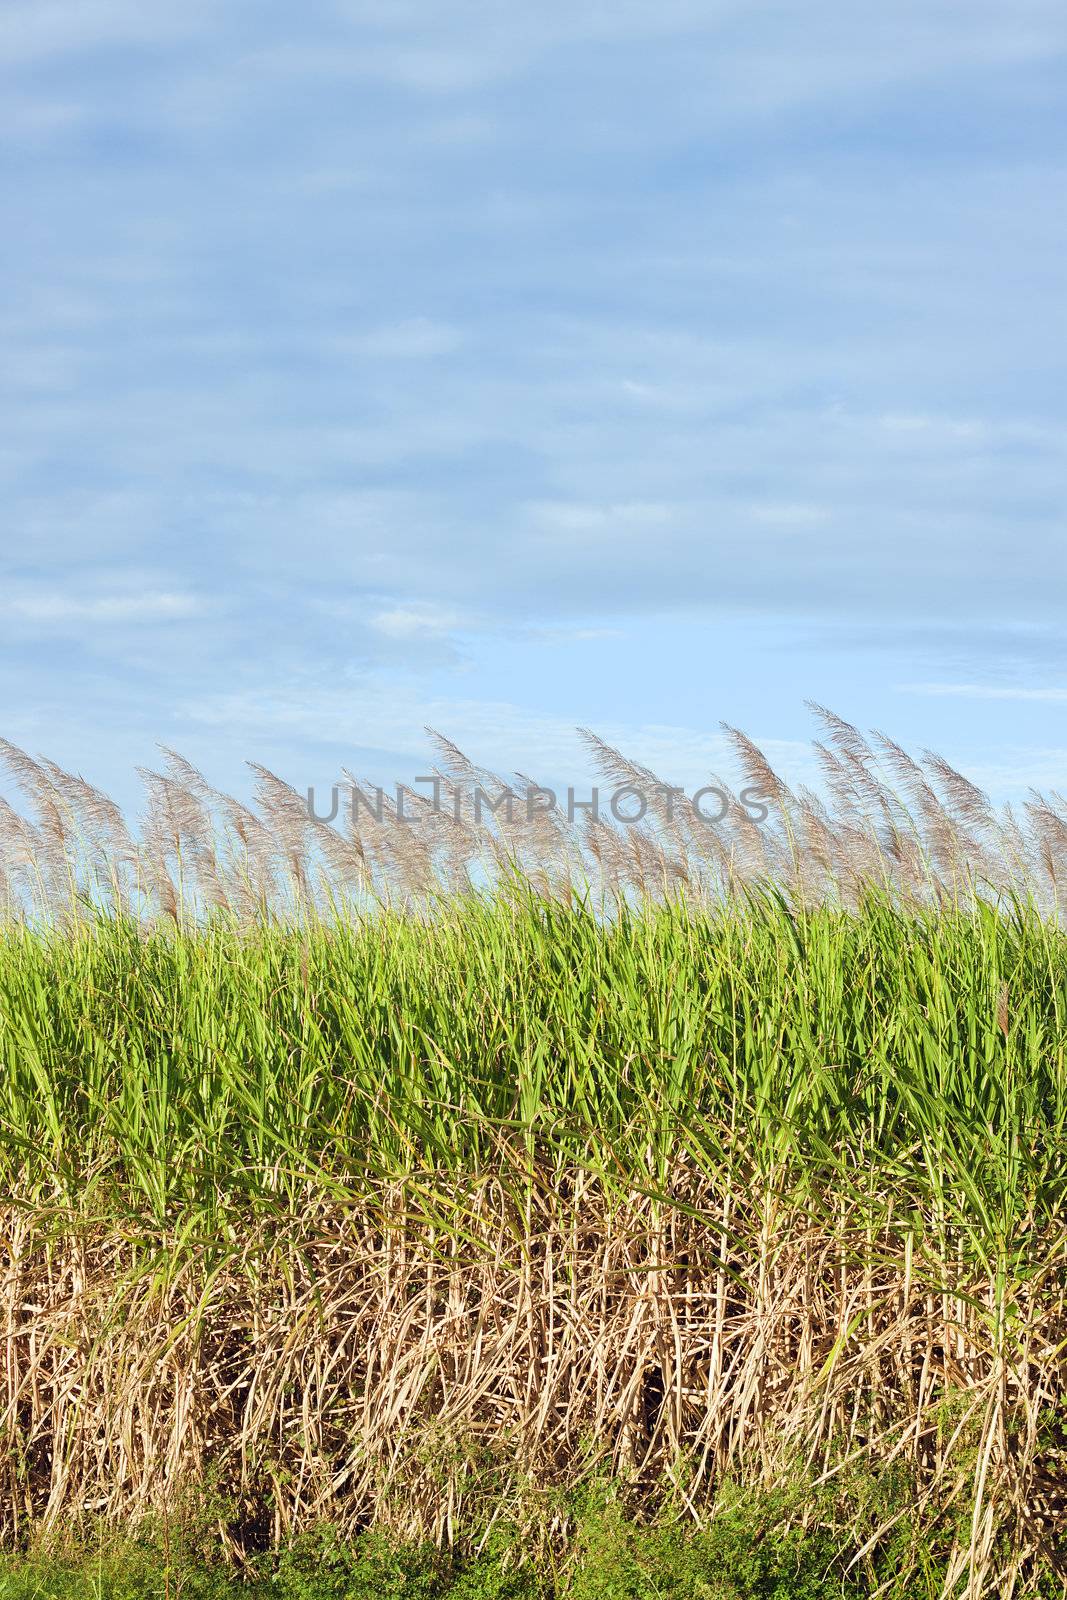 Beautiful image of sugar cane in bloom by Jaykayl